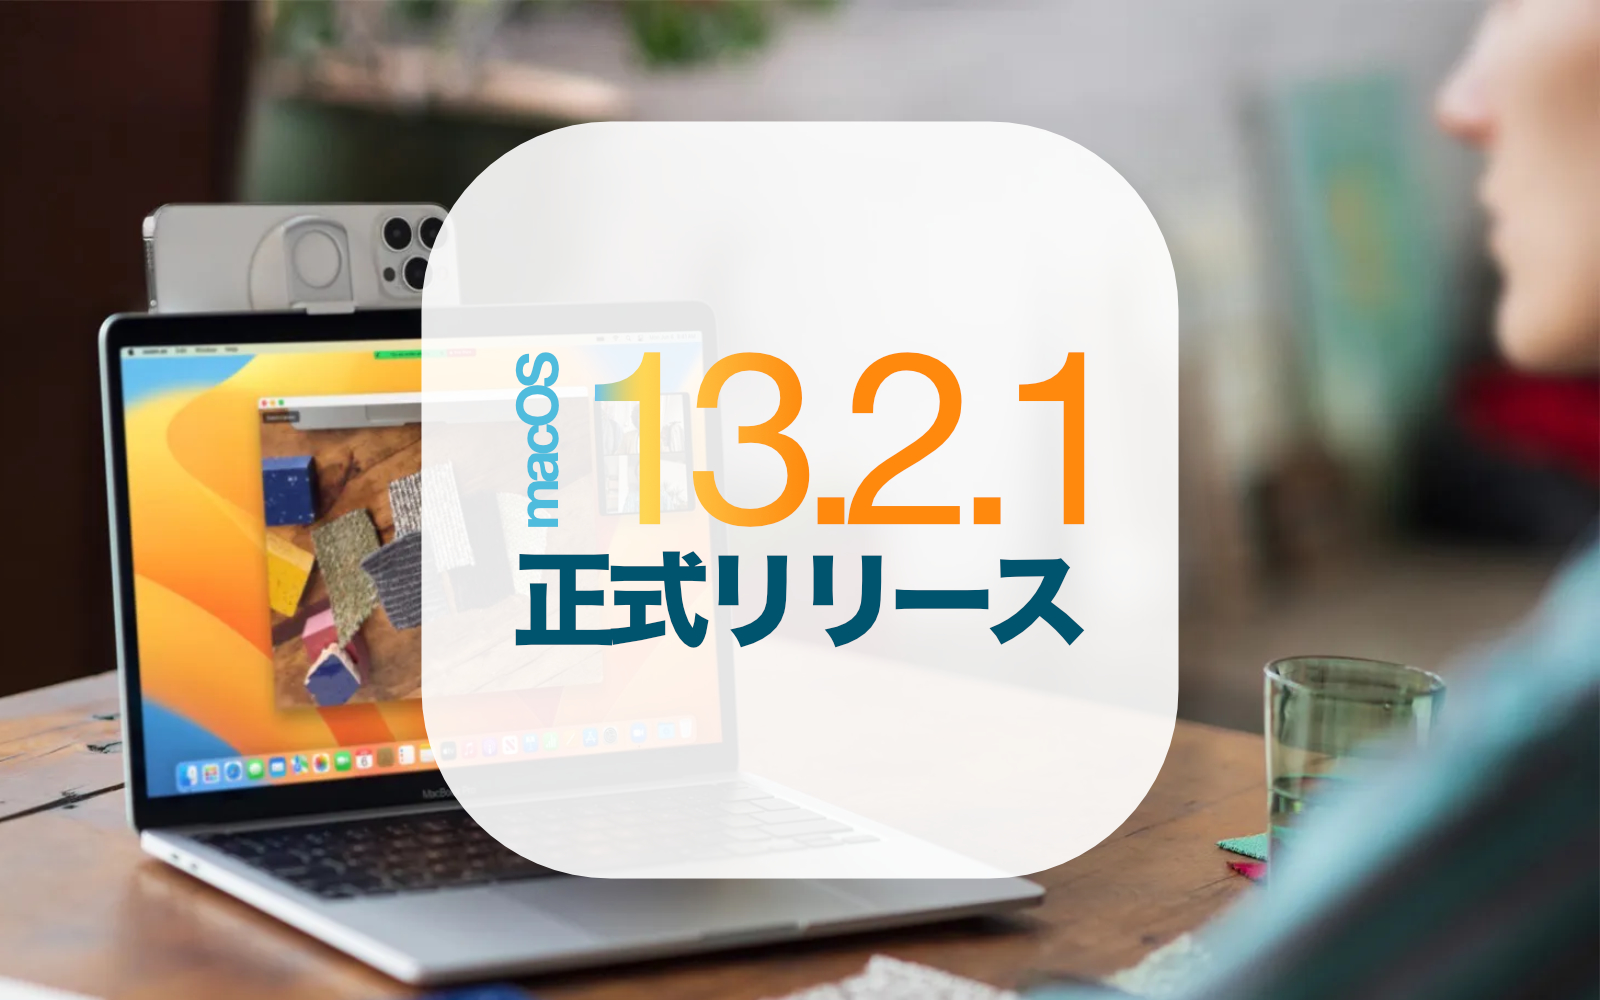 MacOS13 Ventura 13 2 1 official release